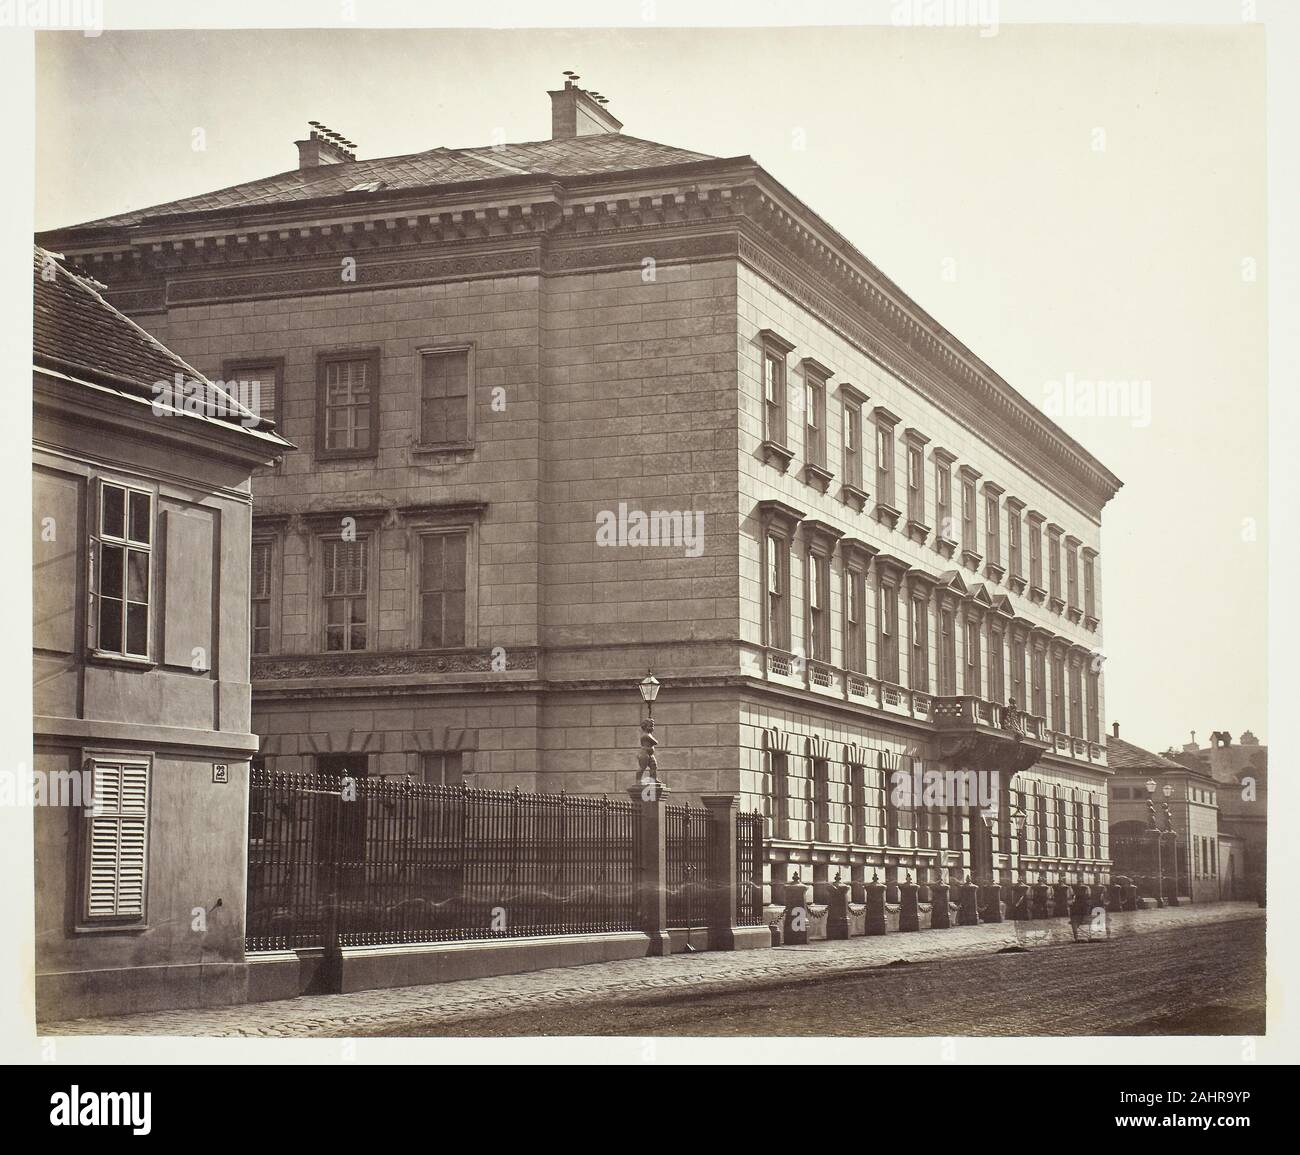 Anonyme. N° 23 Rennweg, Palais hauts Durchlaucht des Fürsten Metternich. 1860-1869. L'Autriche. L'albumine Banque D'Images